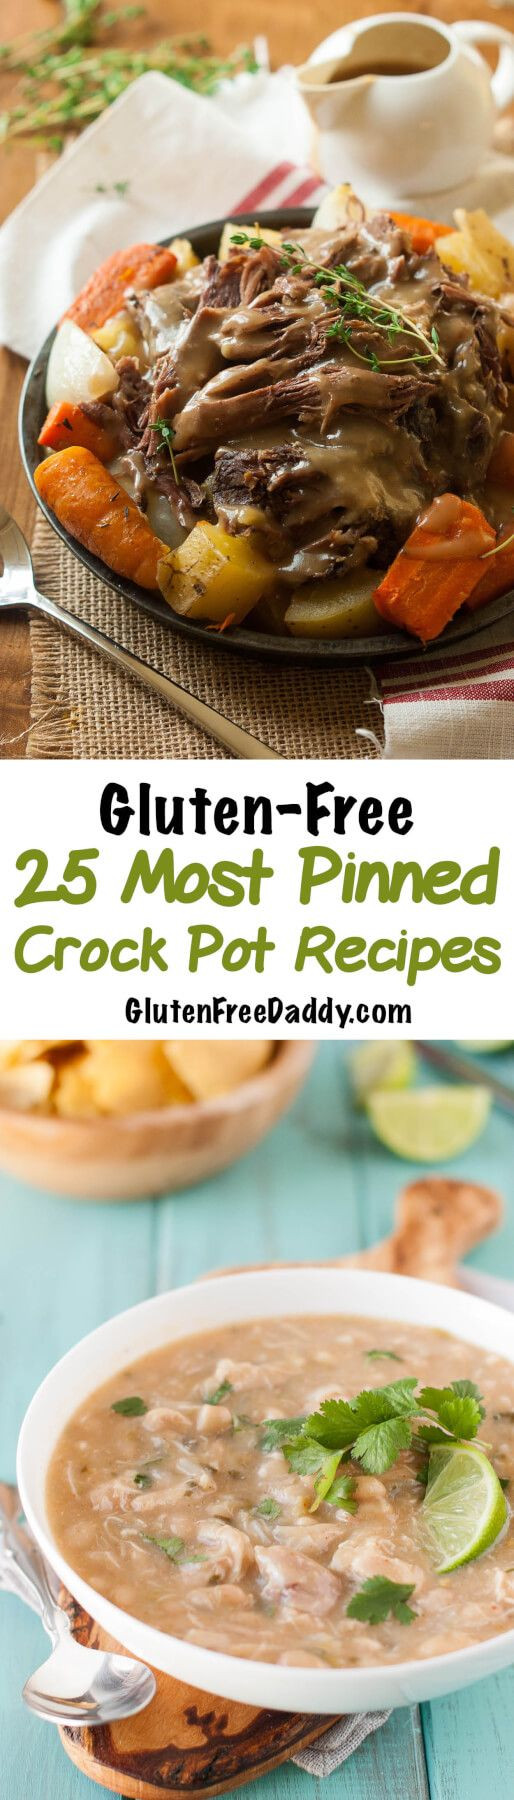 Gluten Free Dairy Free Crockpot Recipes
 Best 25 Gluten free ideas on Pinterest